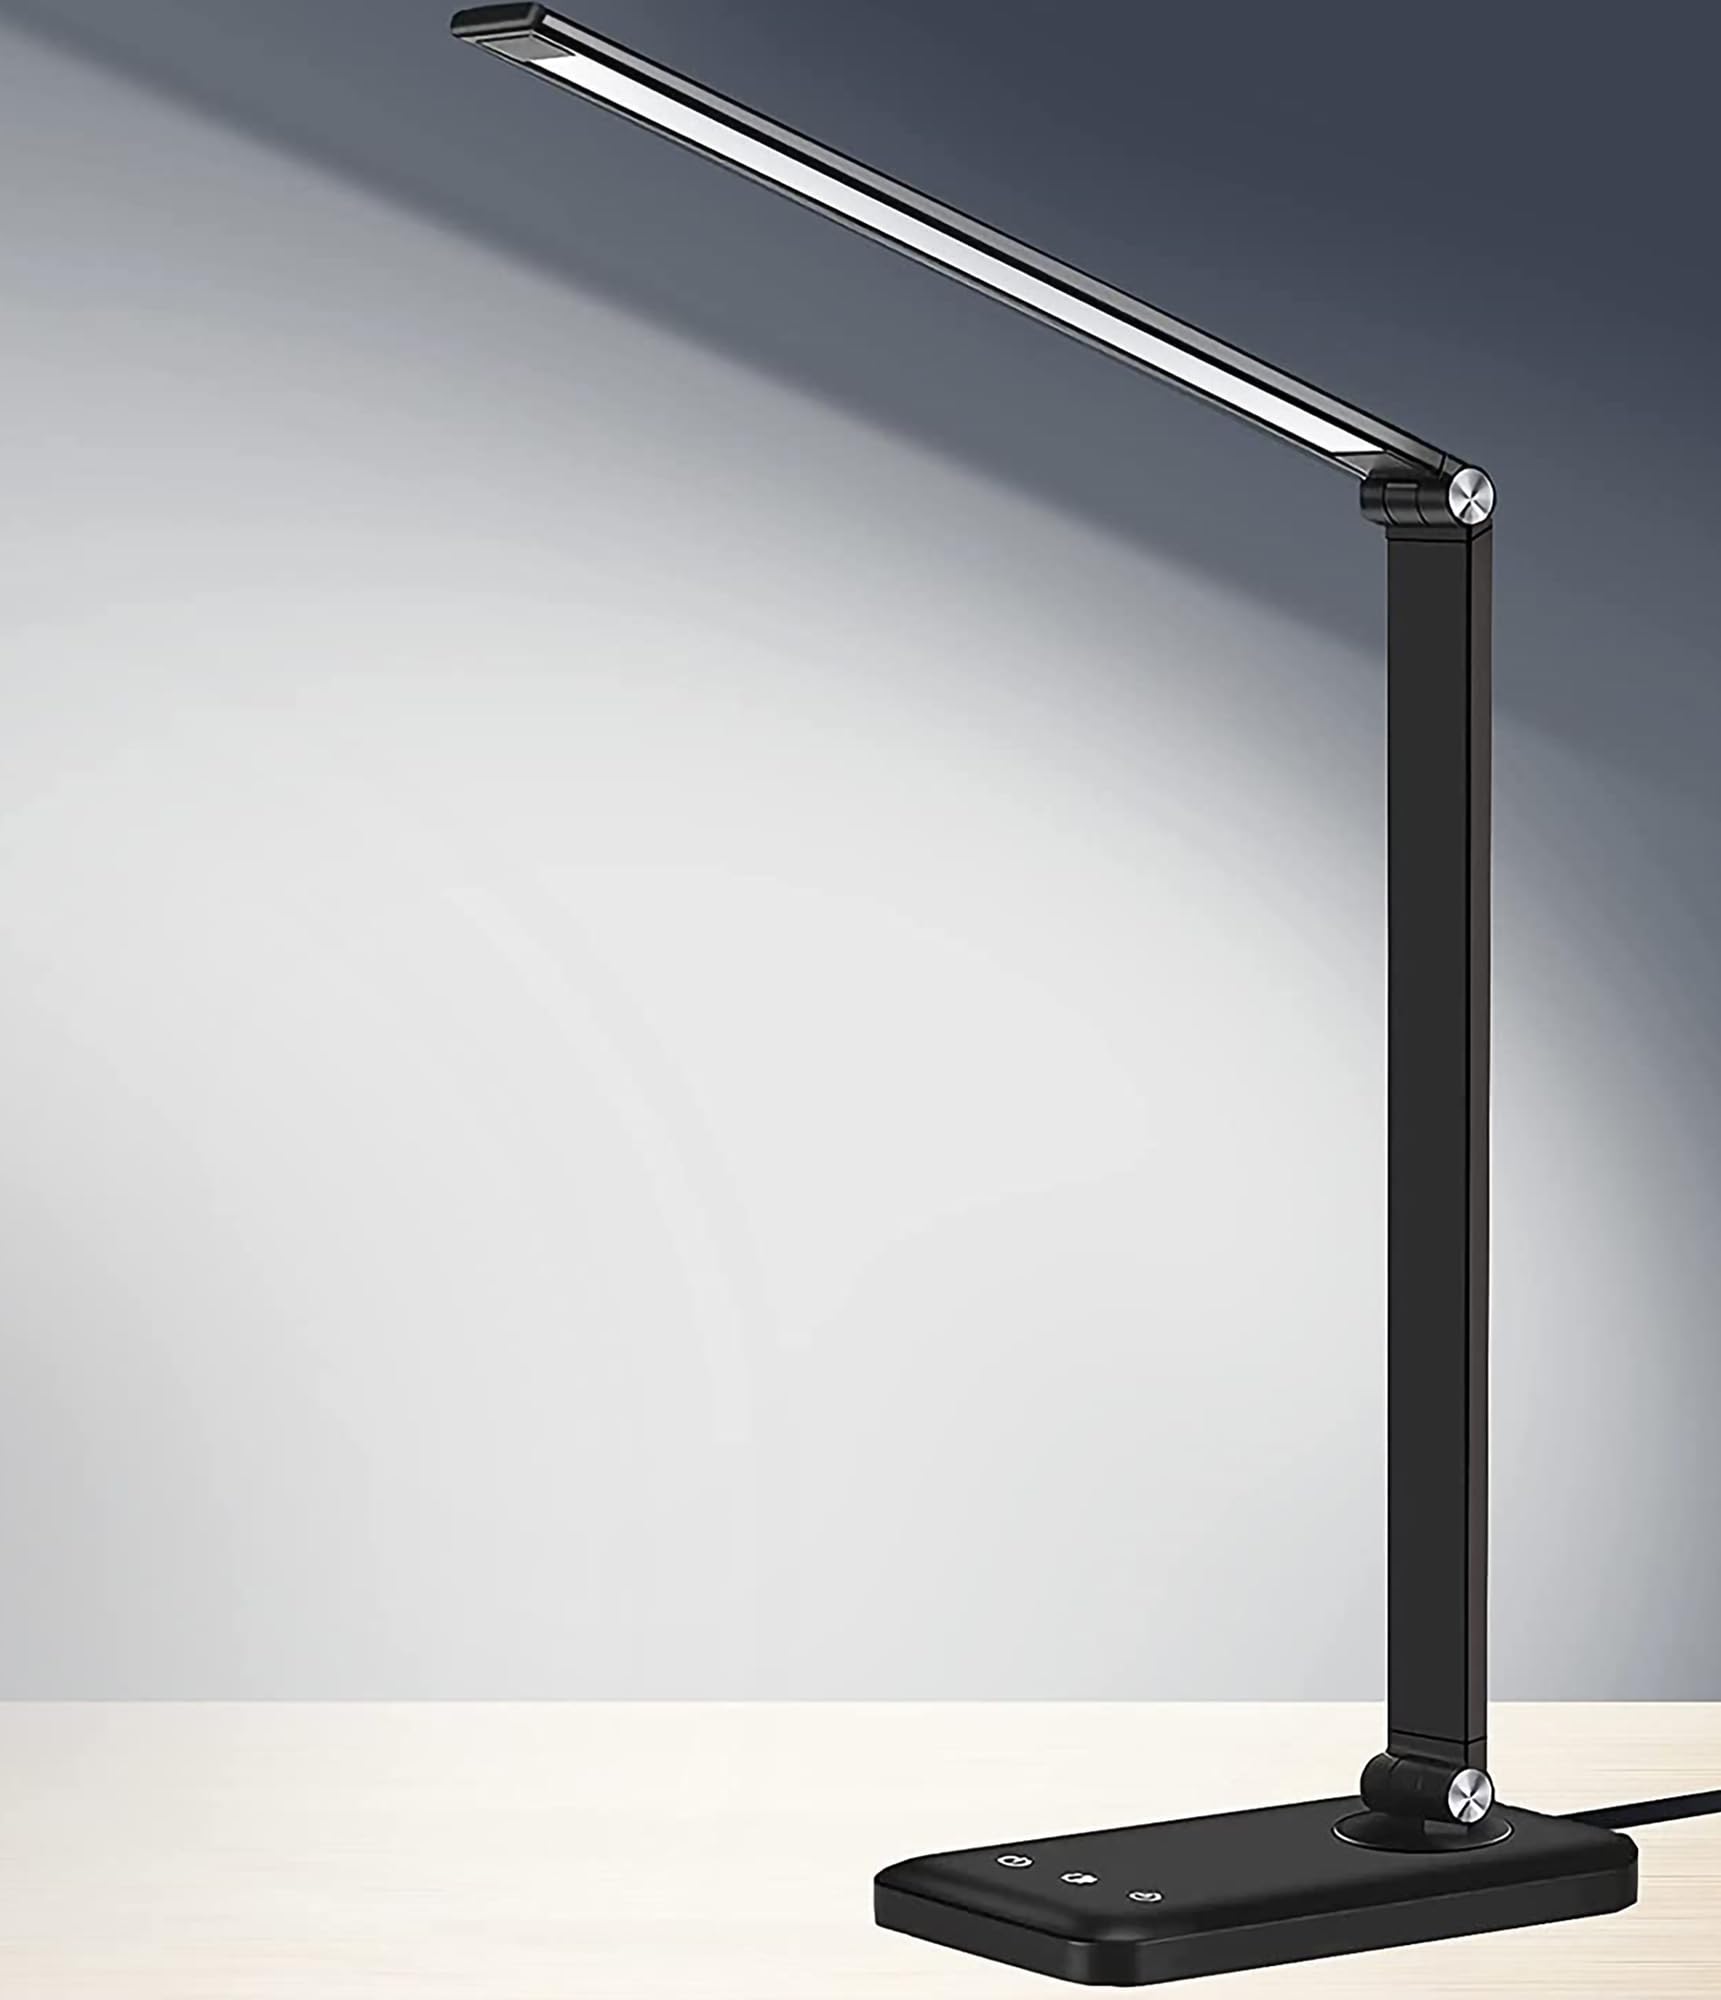 AFROG Multifunctional LED Desk Lamp with USB Charging Port, 5 Lighting Modes,5 Brightness Levels, Sensitive Control, 30/60 min Auto Timer, Eye-Caring Office Lamp，5000K,8W Black 3.0,  Only $9.97